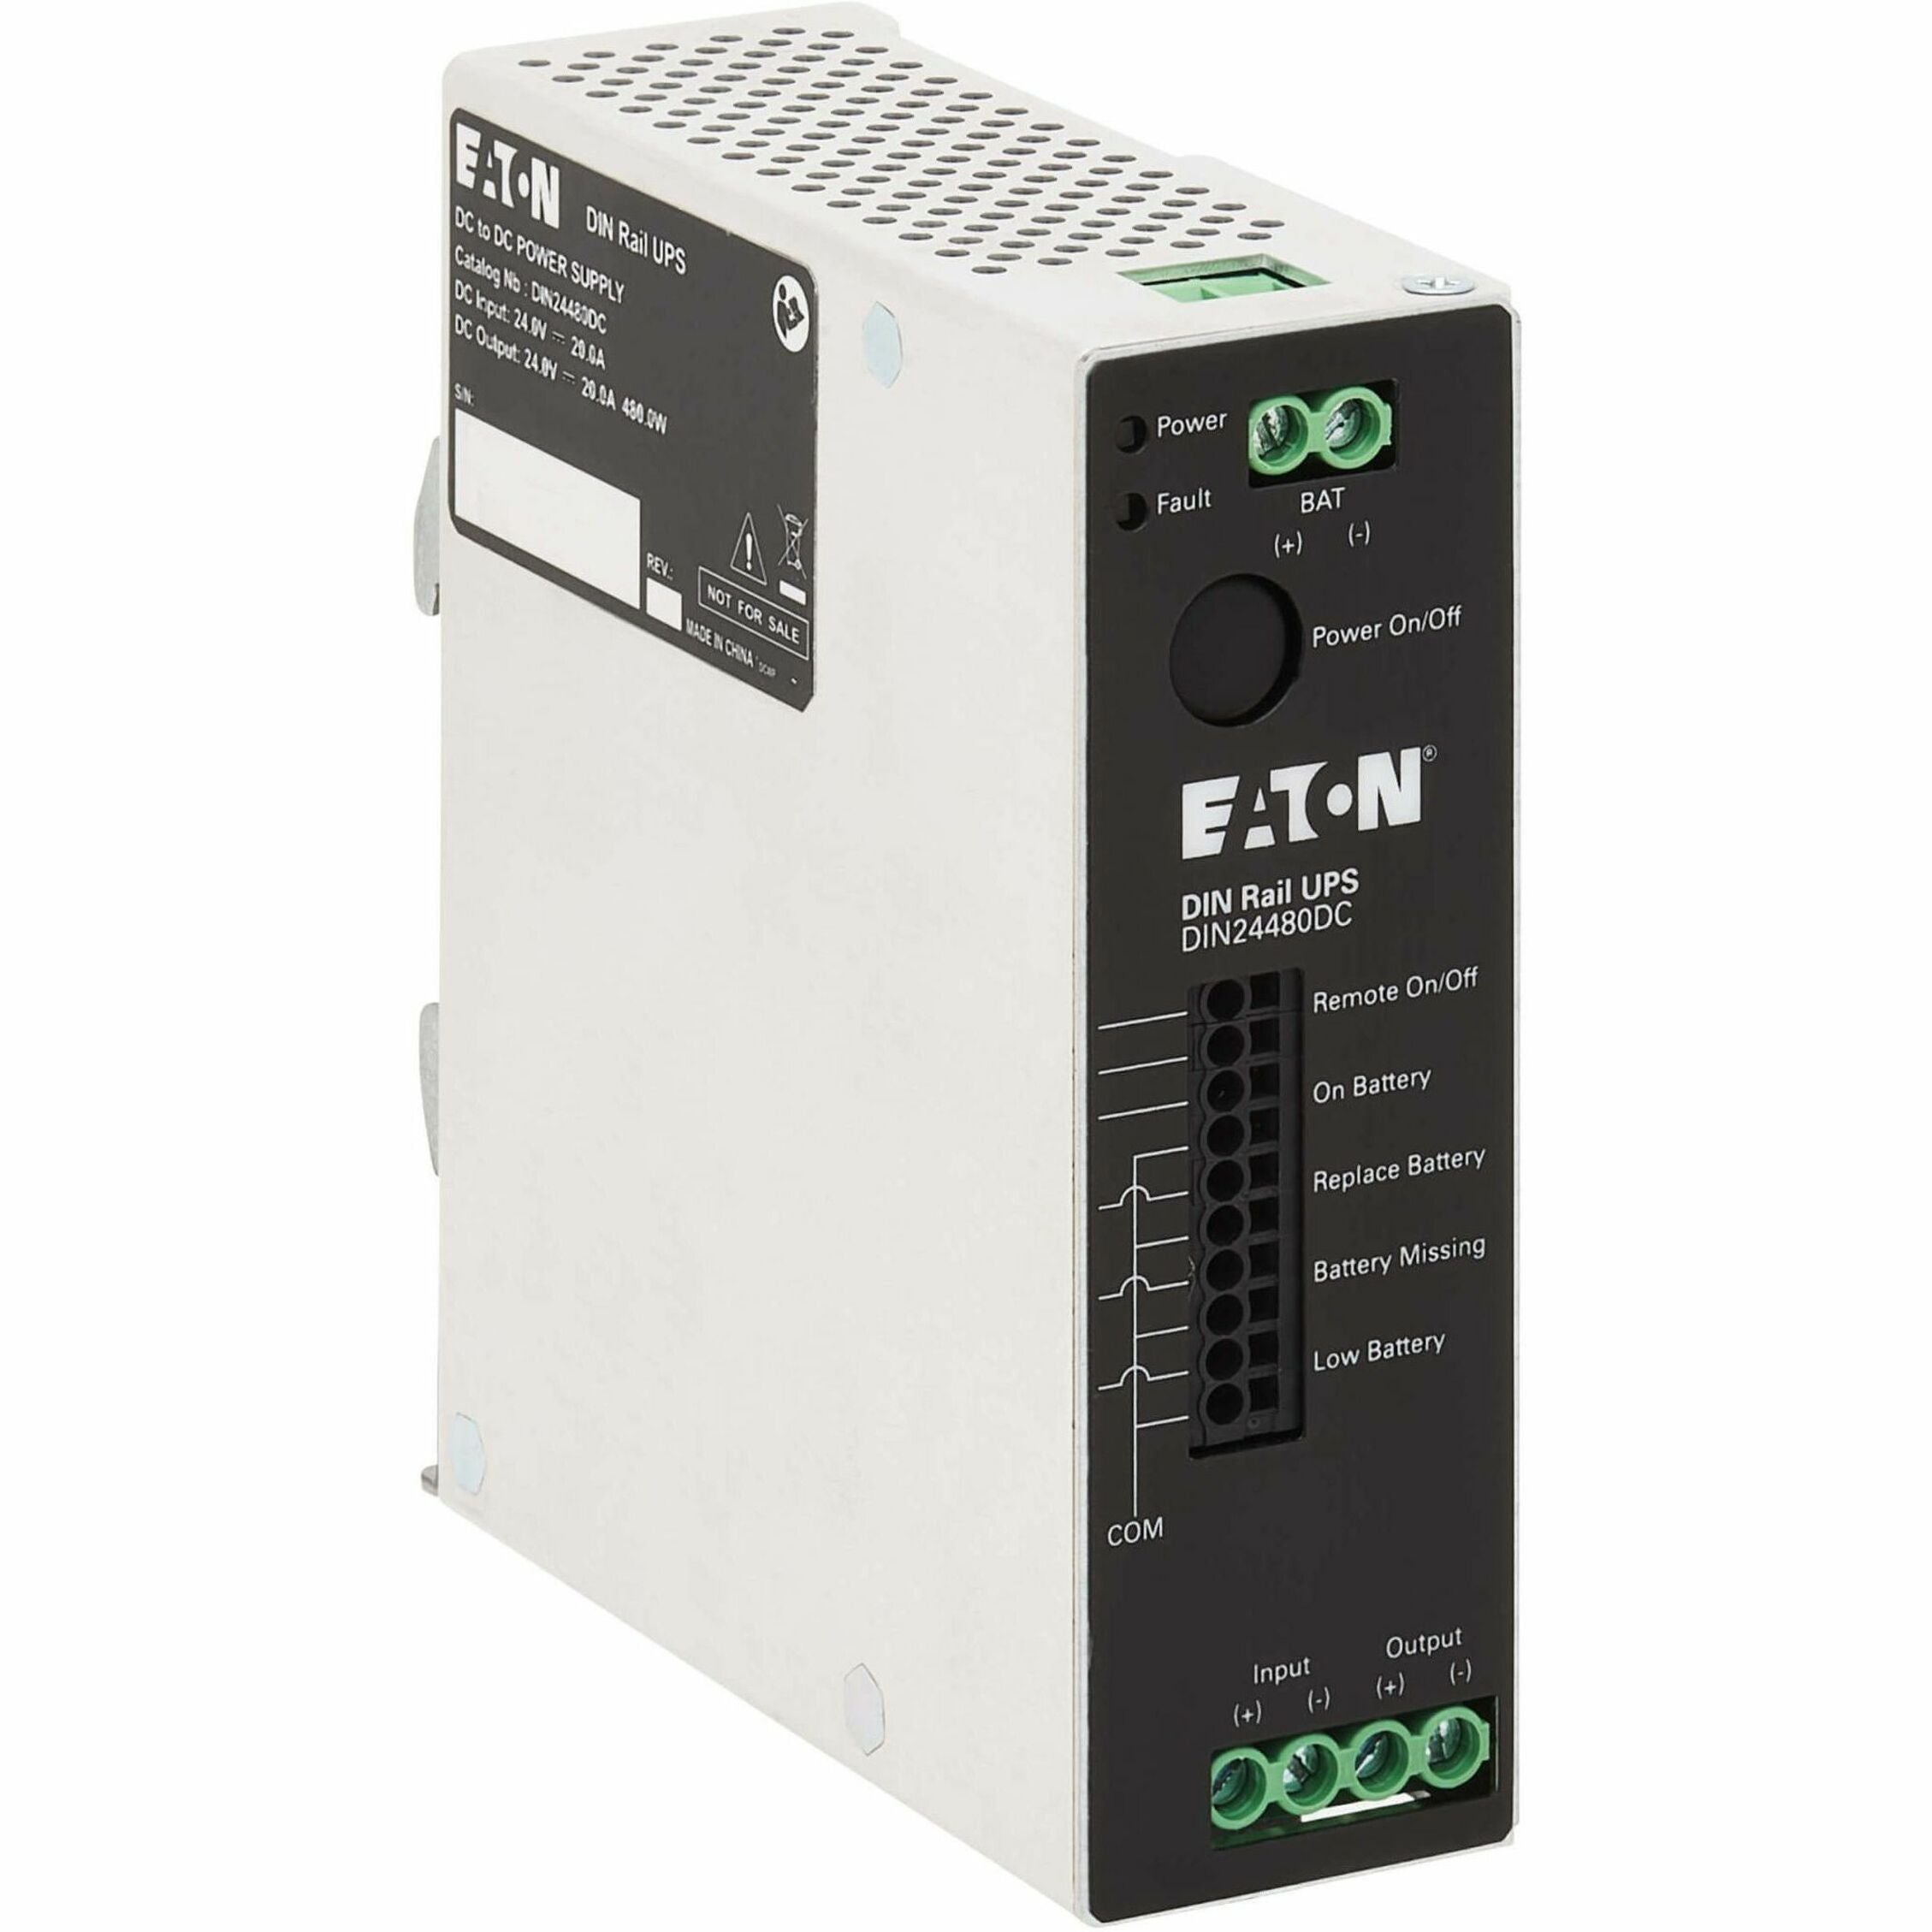 Eaton DIN24480DC General Purpose UPS, 480VA DIN Rail UPS, 24V DC Input/Output